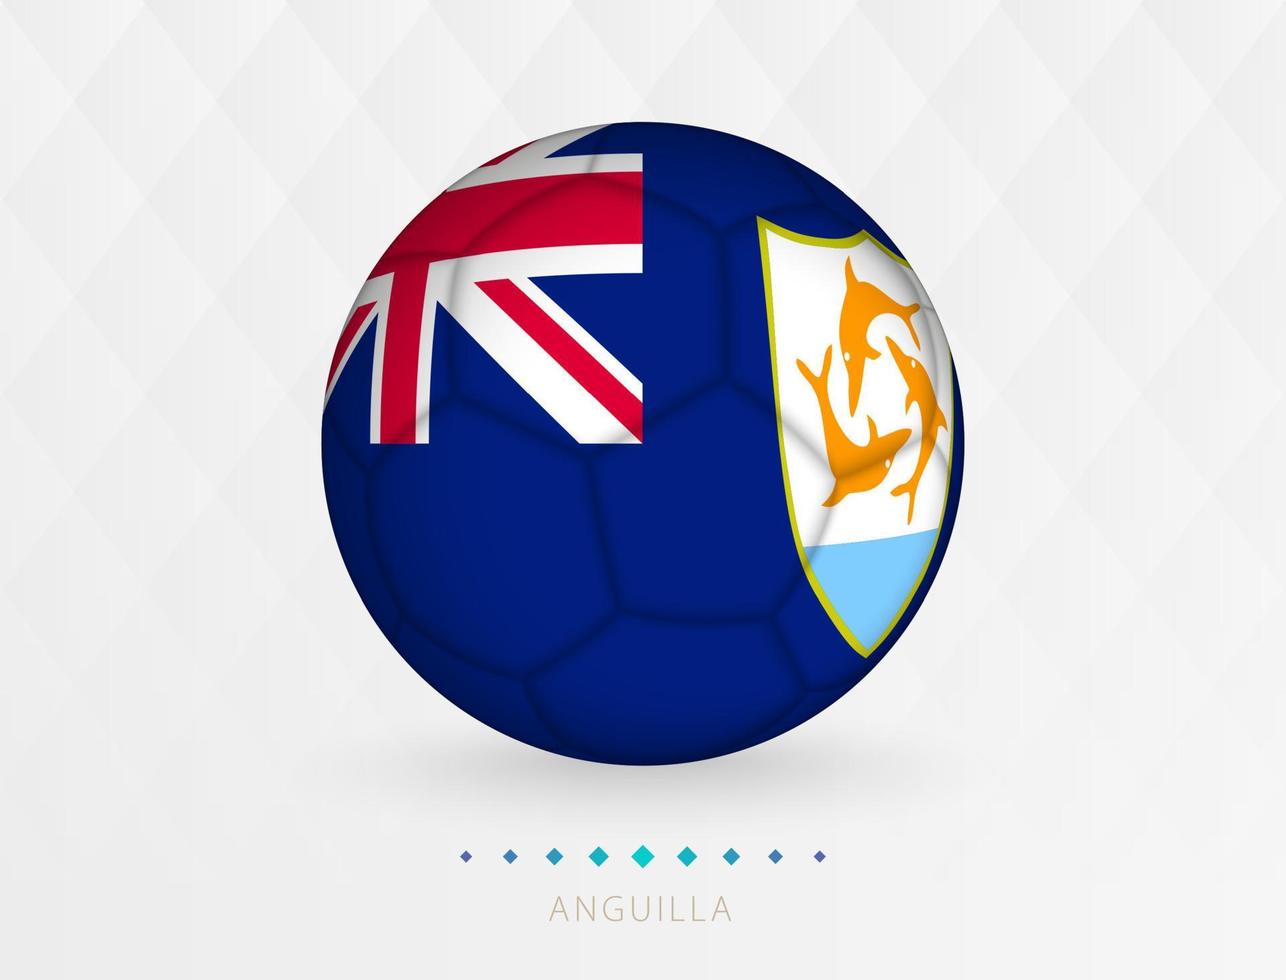 Amerikaans voetbal bal met Anguilla vlag patroon, voetbal bal met vlag van Anguilla nationaal team. vector